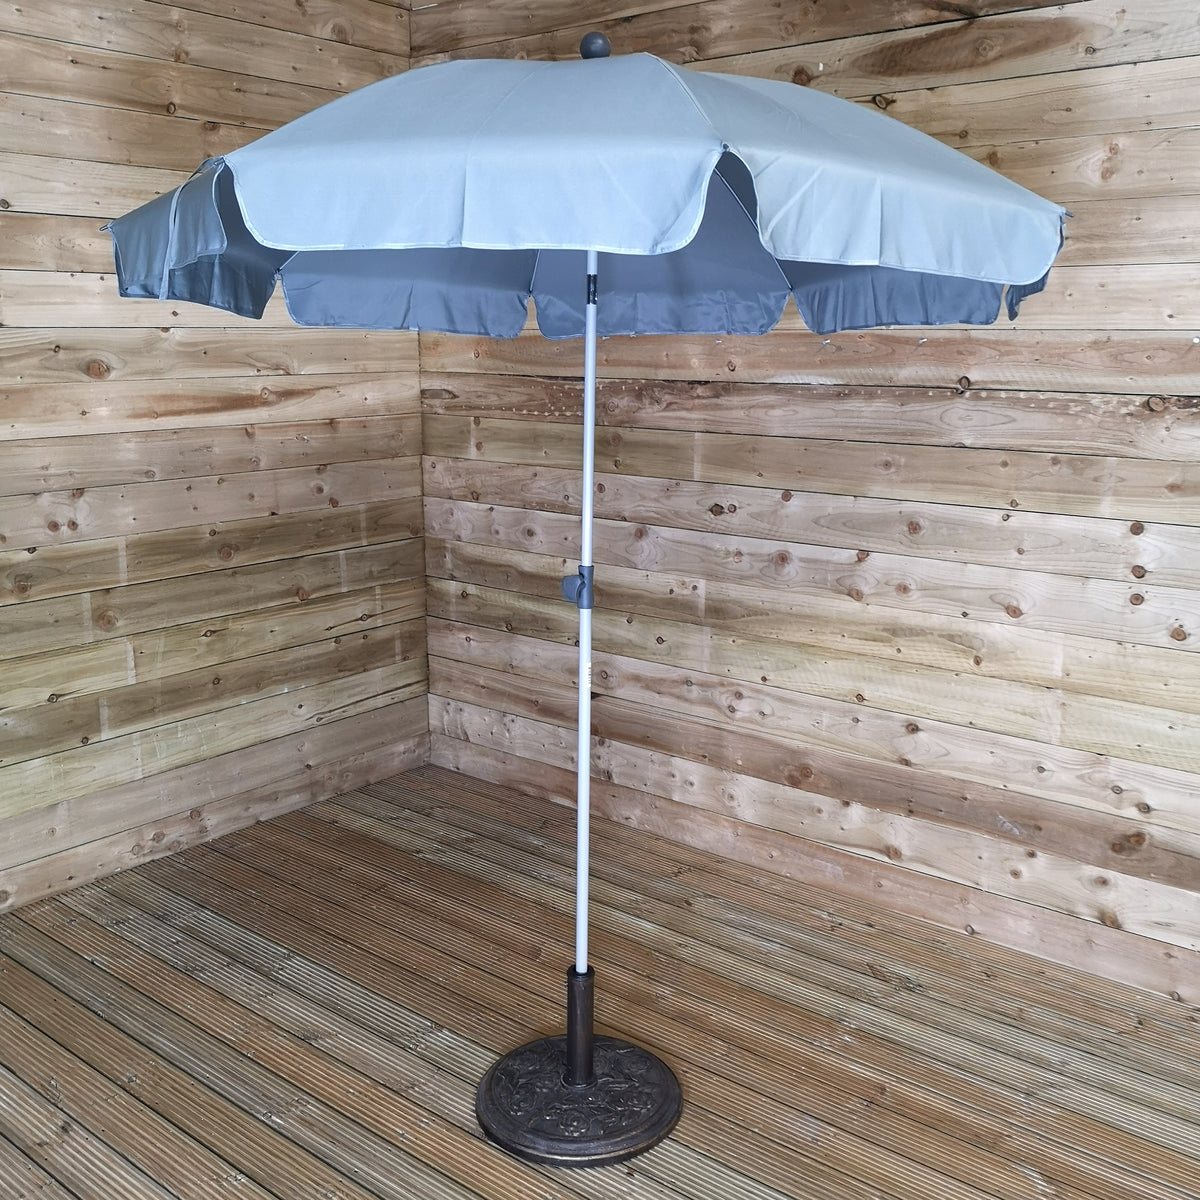 200cm Umbrella with Tilt Action in Grey for Garden or Patio – Cheaper Online